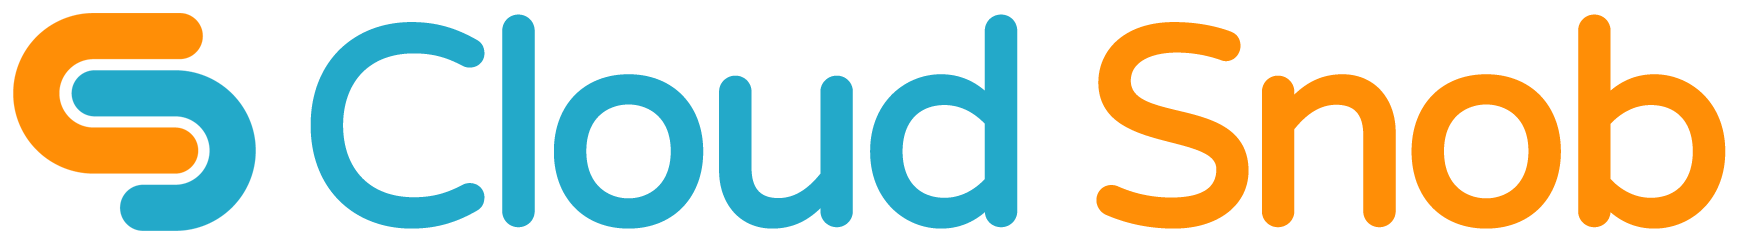 CloadSnob Logo